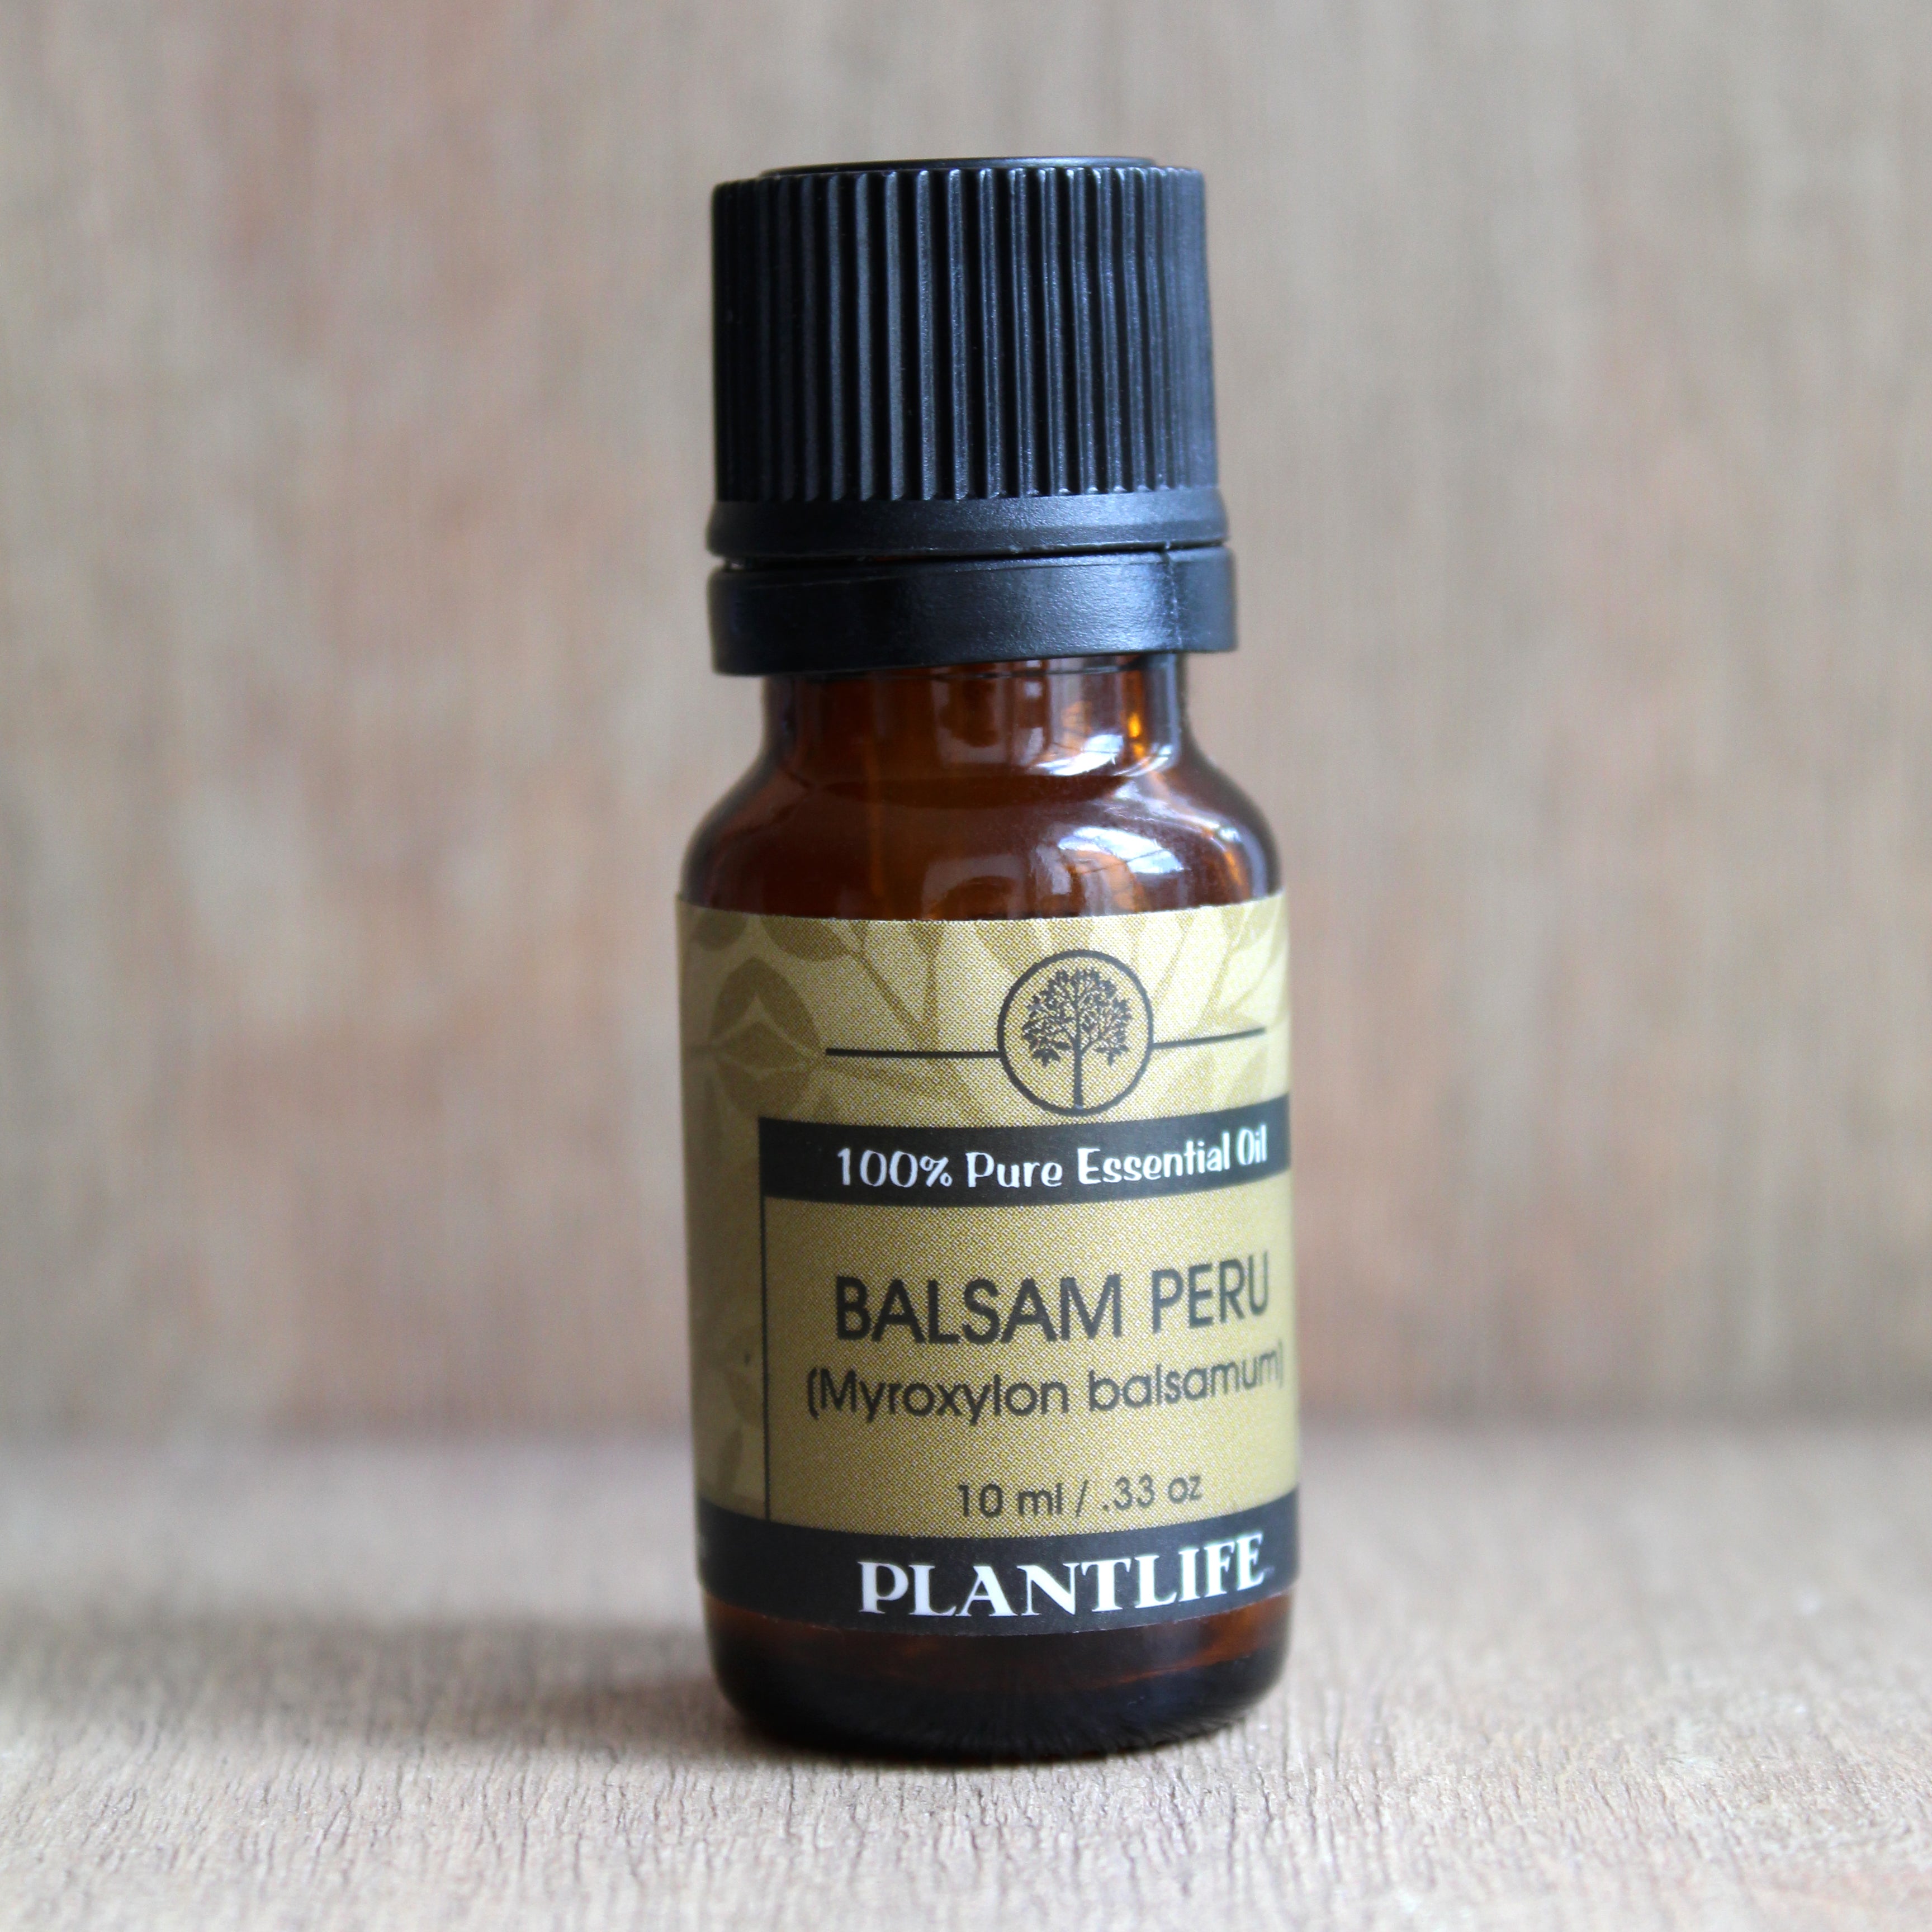 Product Spotlight: Balsam Peru Essential Oil